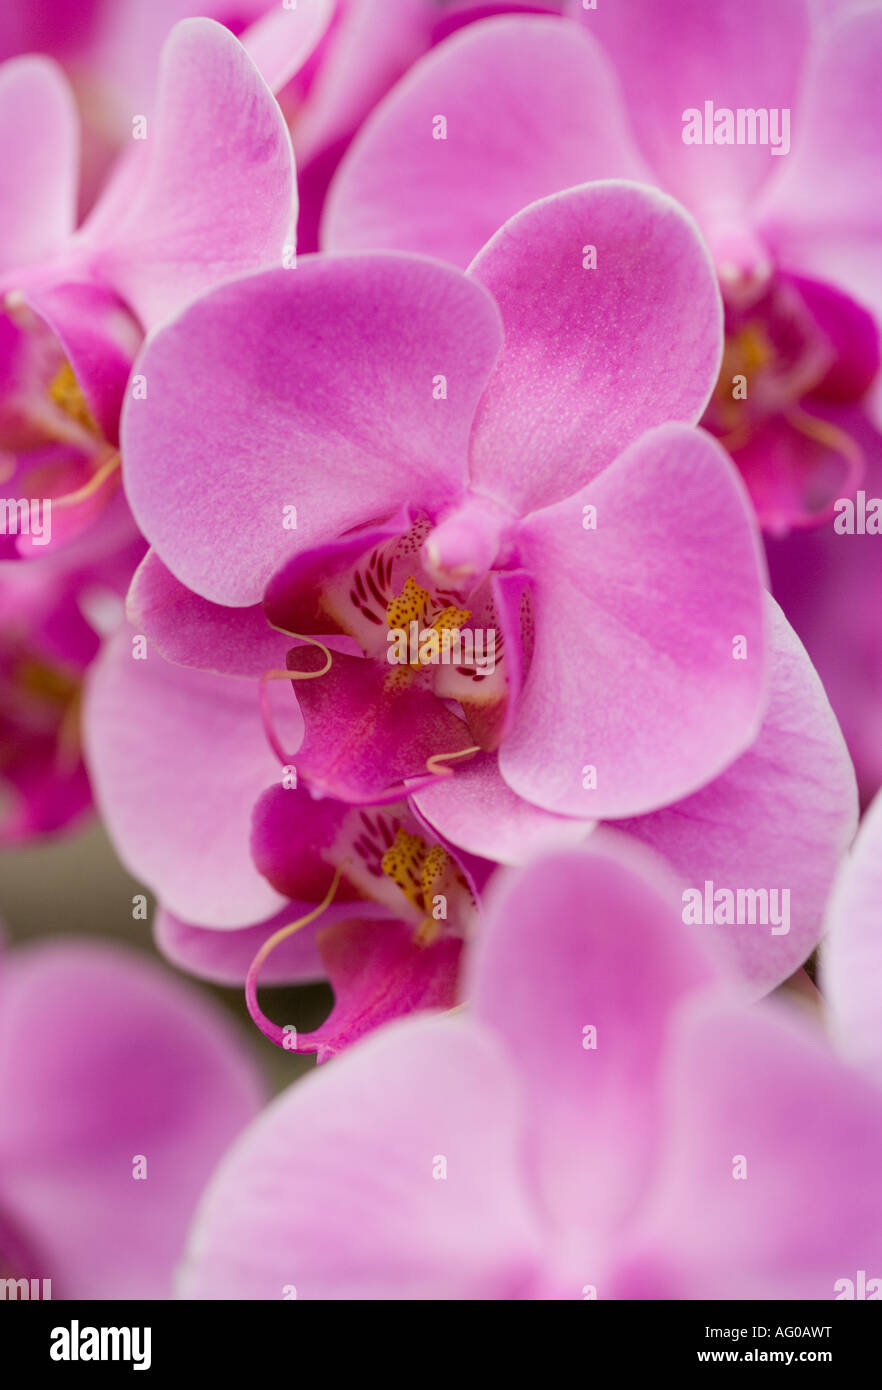 Rosa Orchideen Blüten im detail Stockfoto